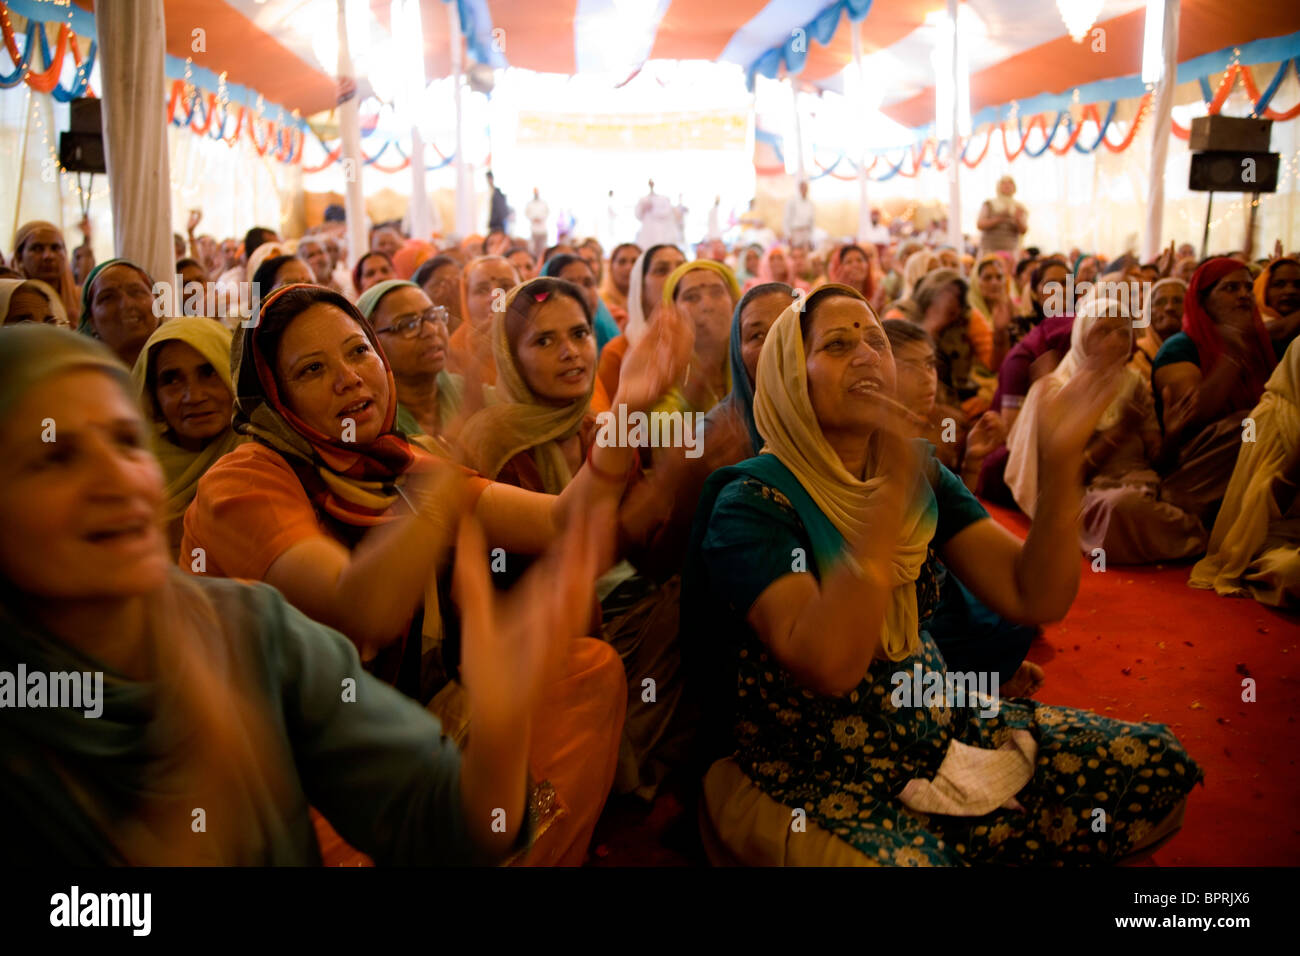 Woman followers of a Baba during the Kumbh Mela festival Haridwar, Uttarakhand, India 2010. Stock Photo